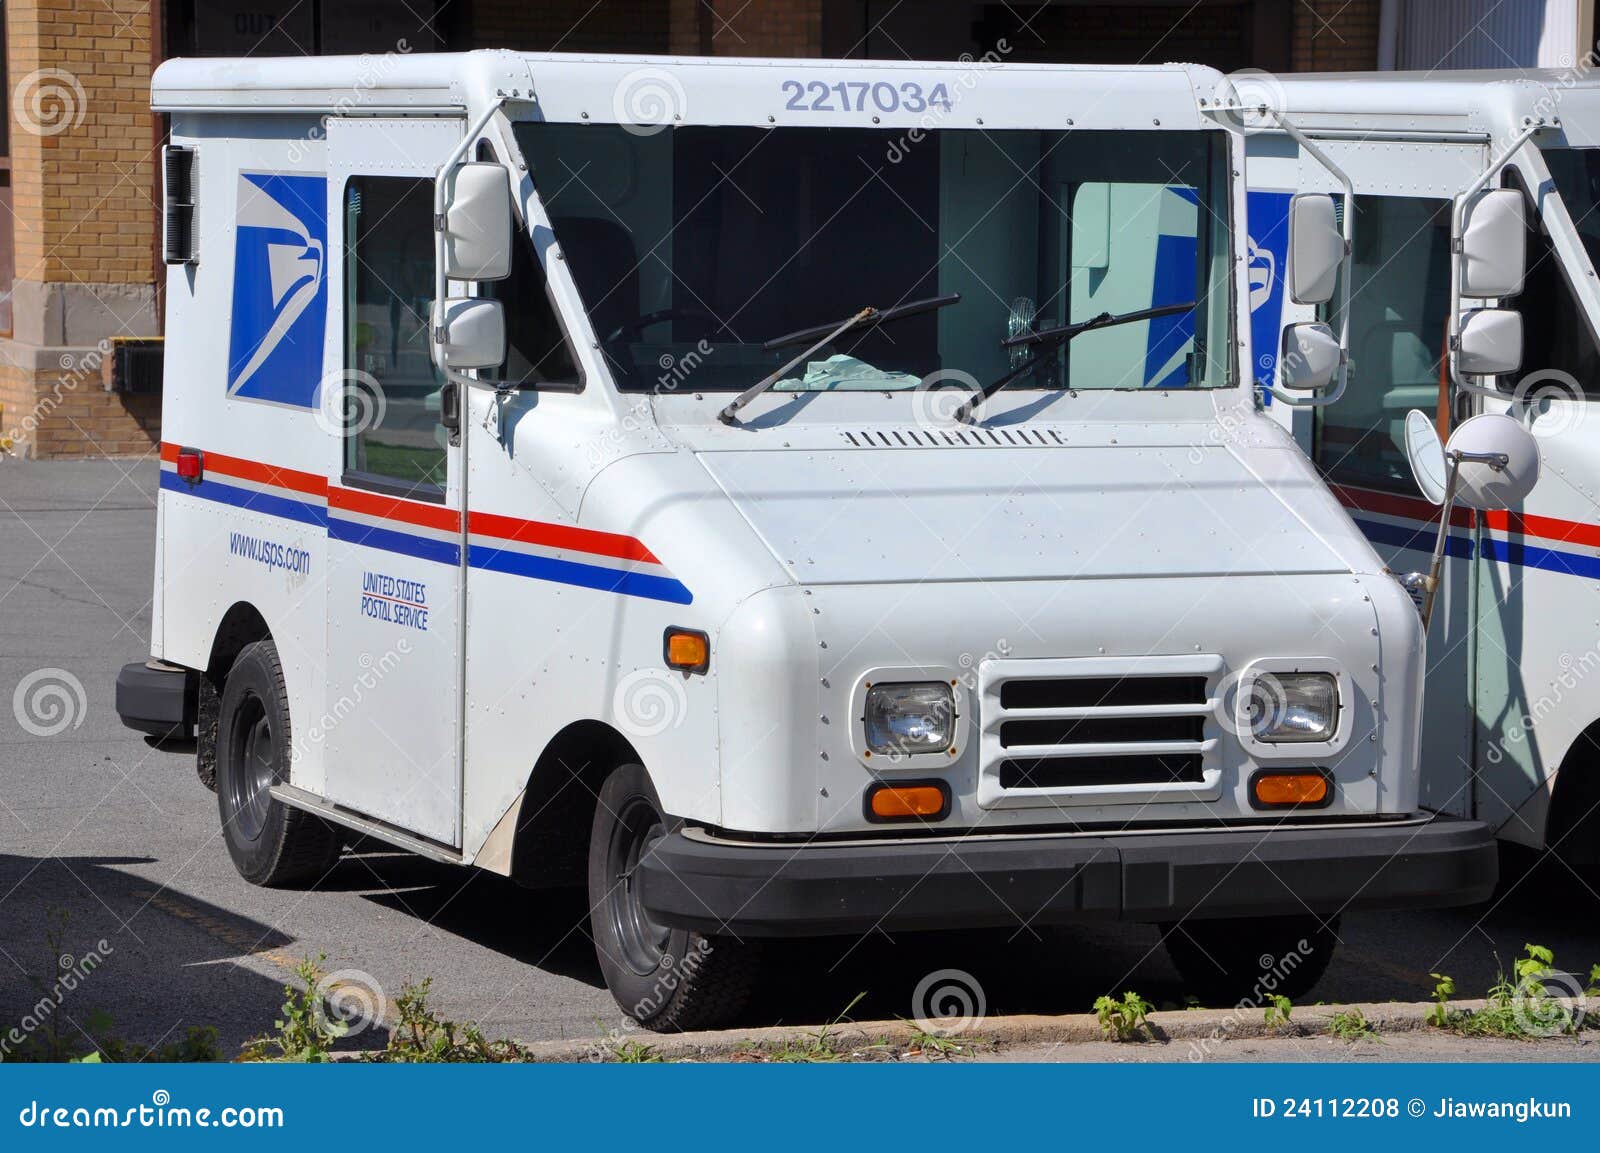 USPS Postal Vehicle Editorial Stock Photo - Image: 24112208